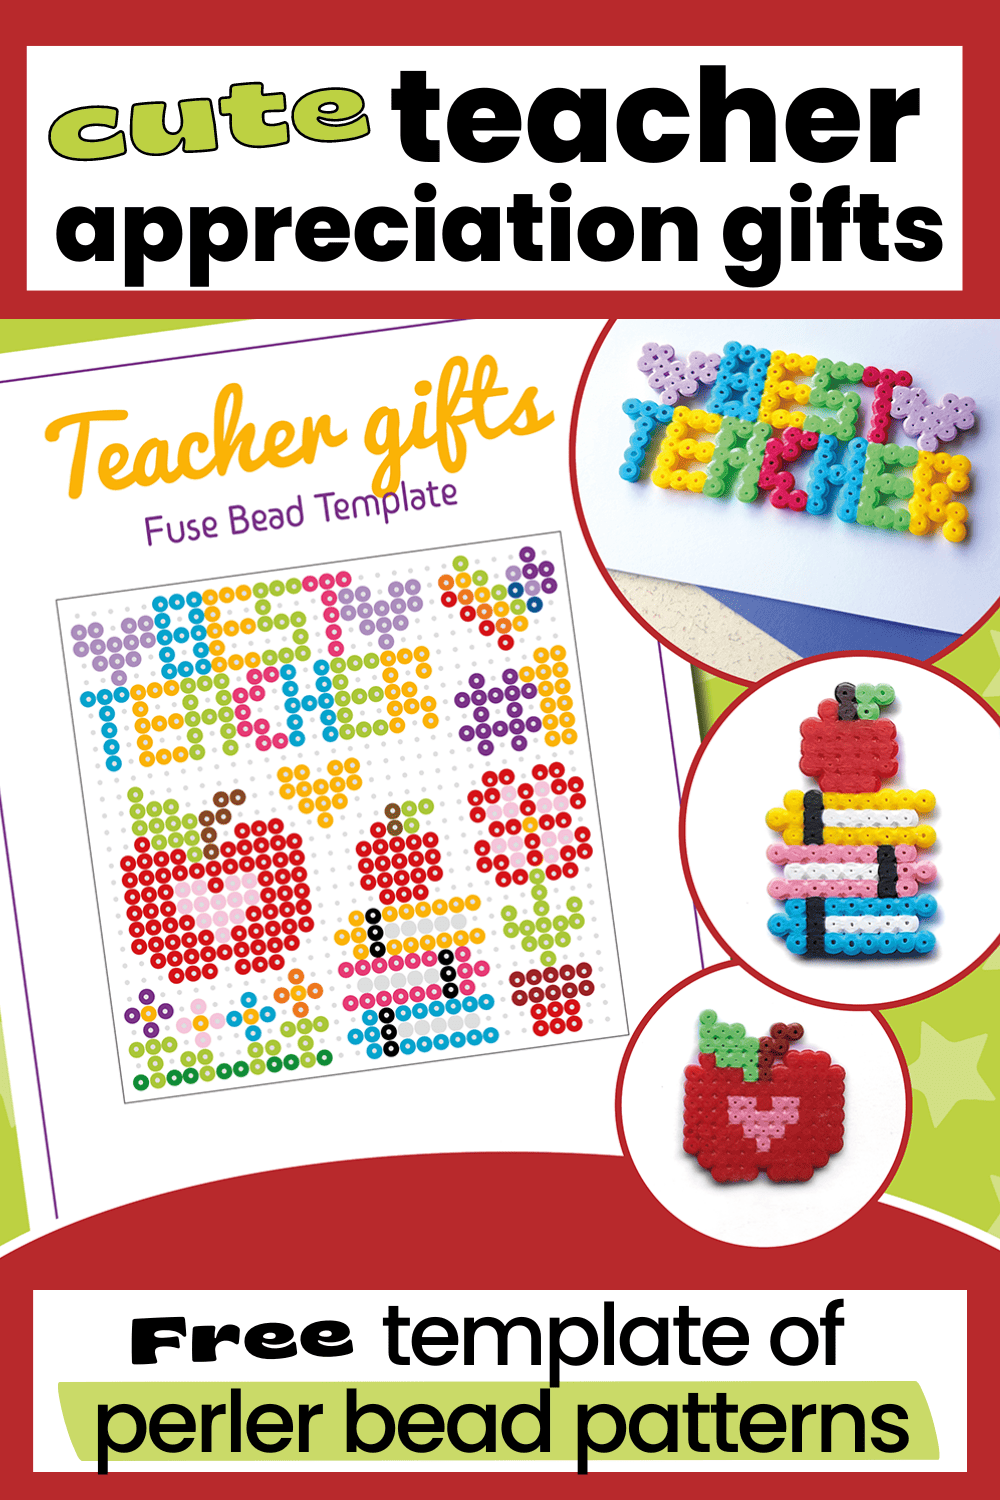 DIY Teacher Appreciation Gifts: Free Perler Bead Patterns for Cute Crafts